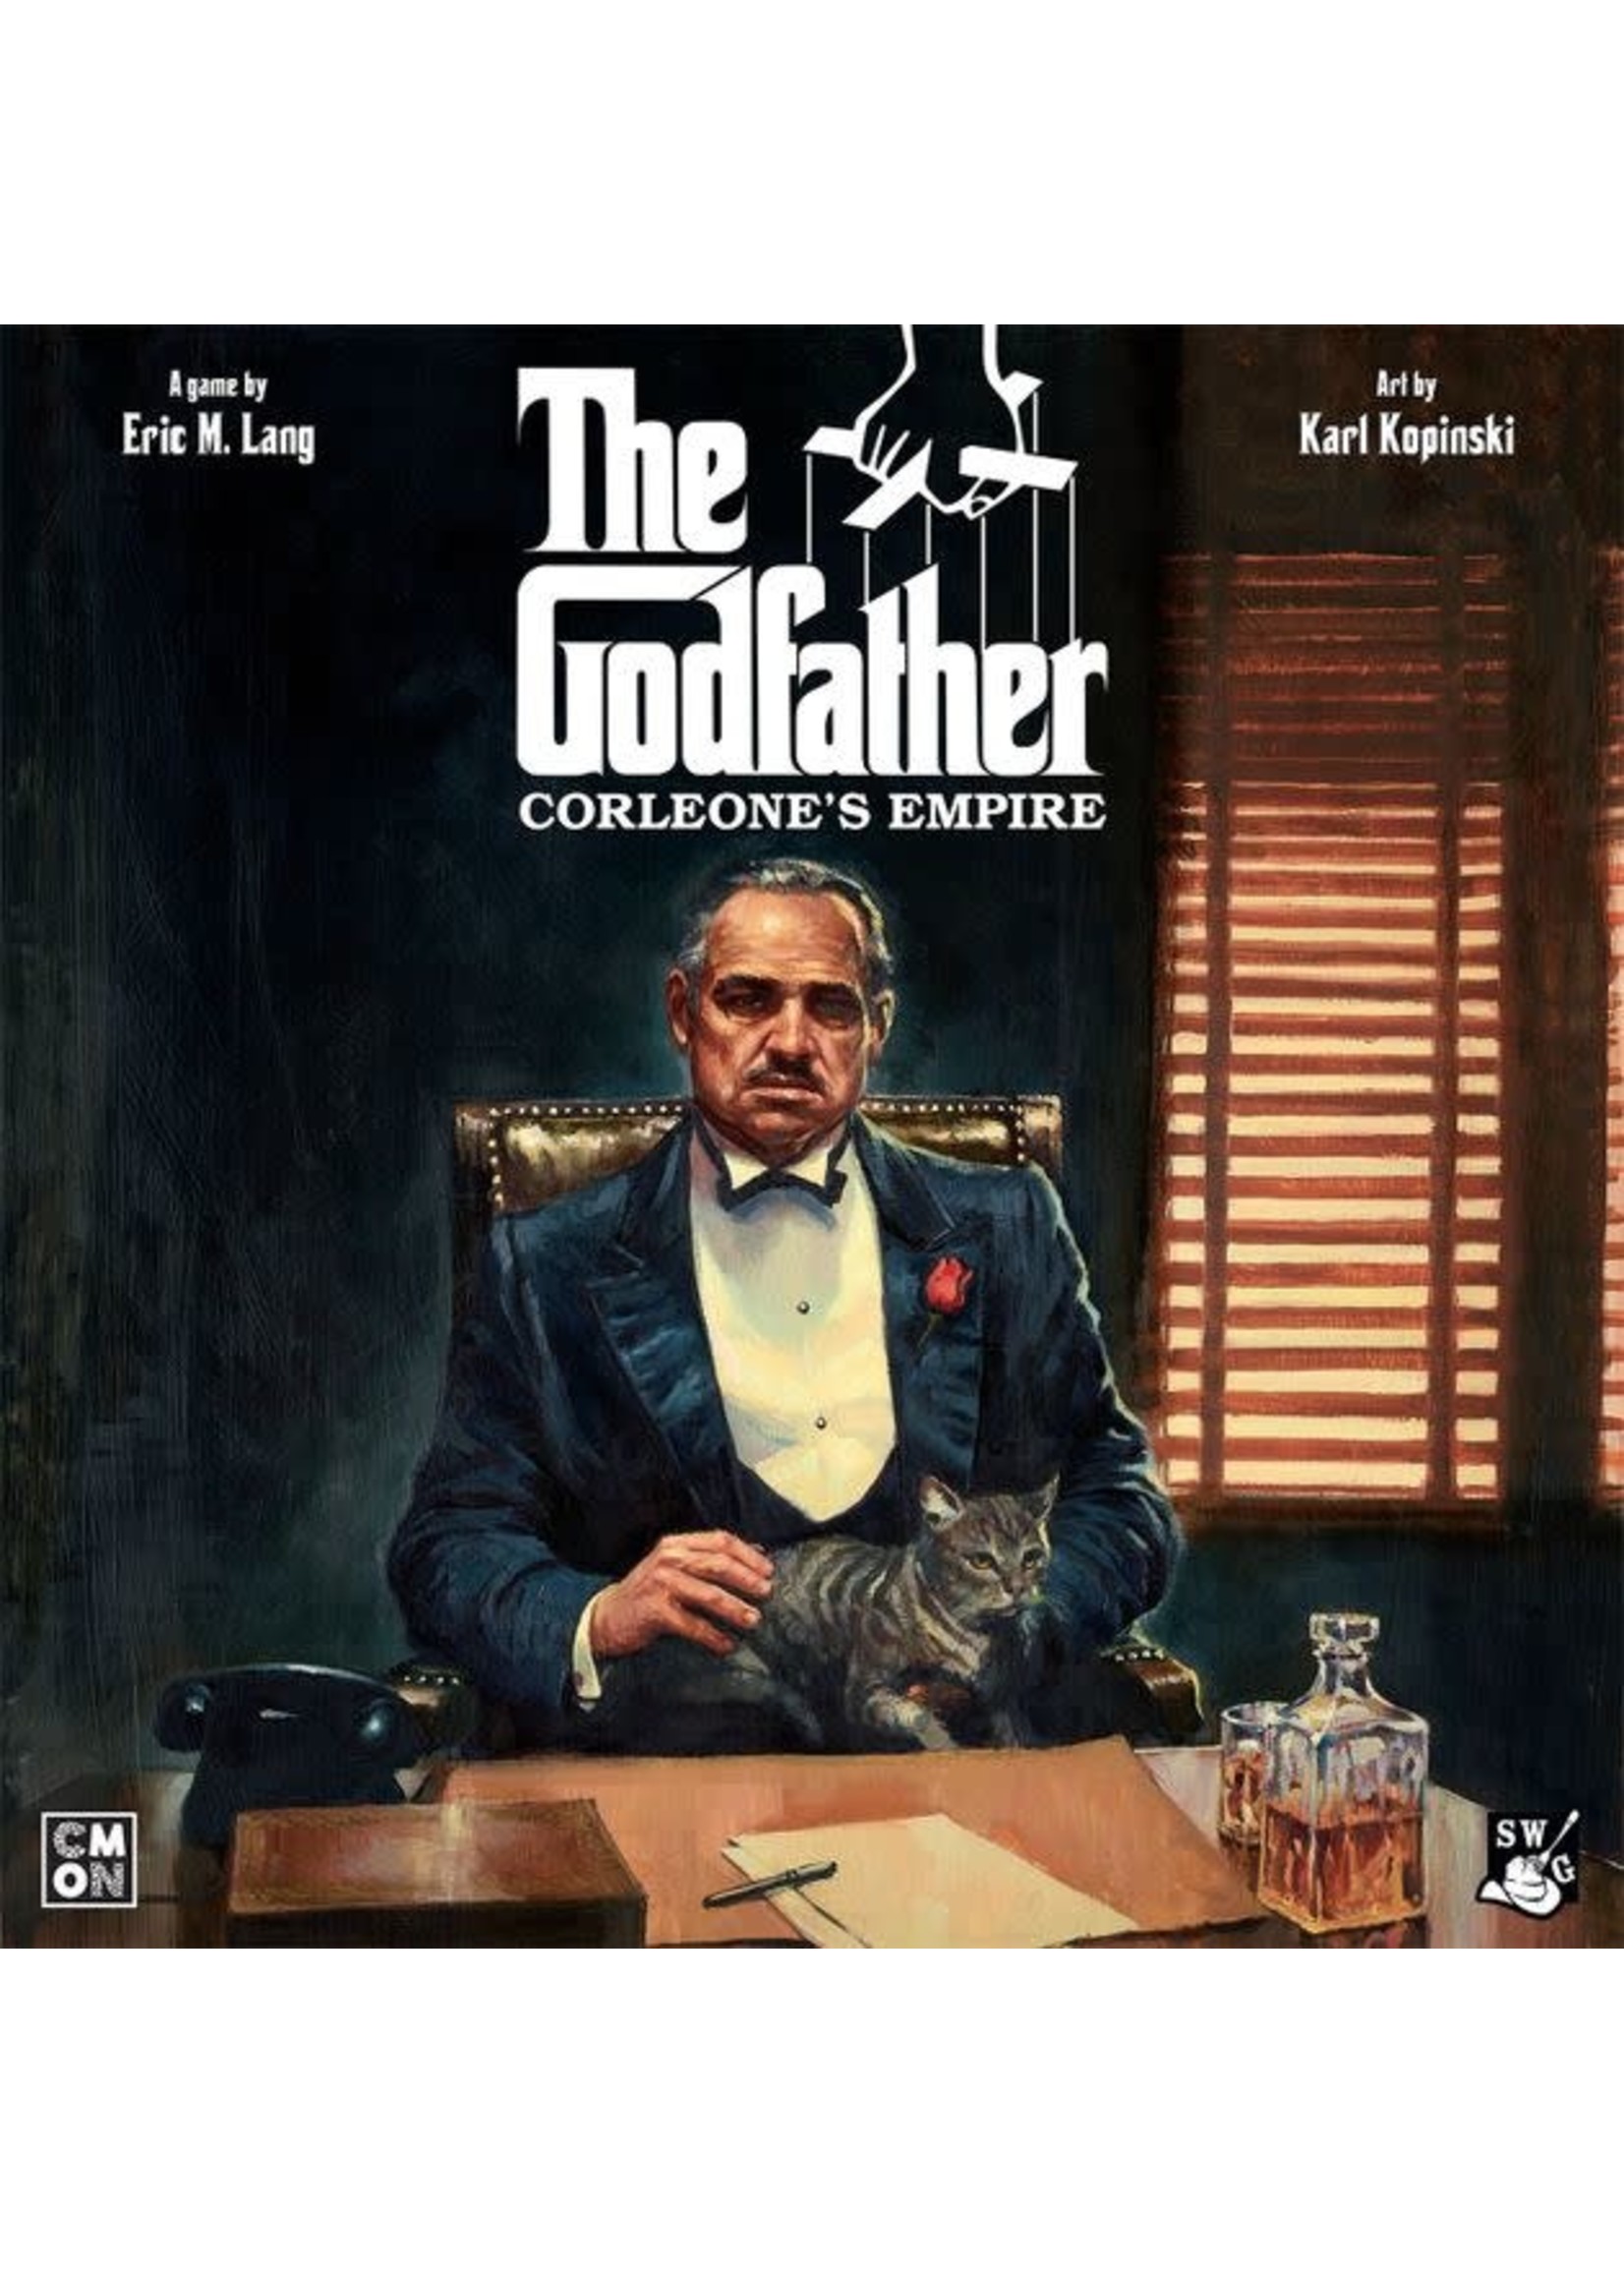 Rental RENTAL - The Godfather: Corleone's Empire 4lb 13oz